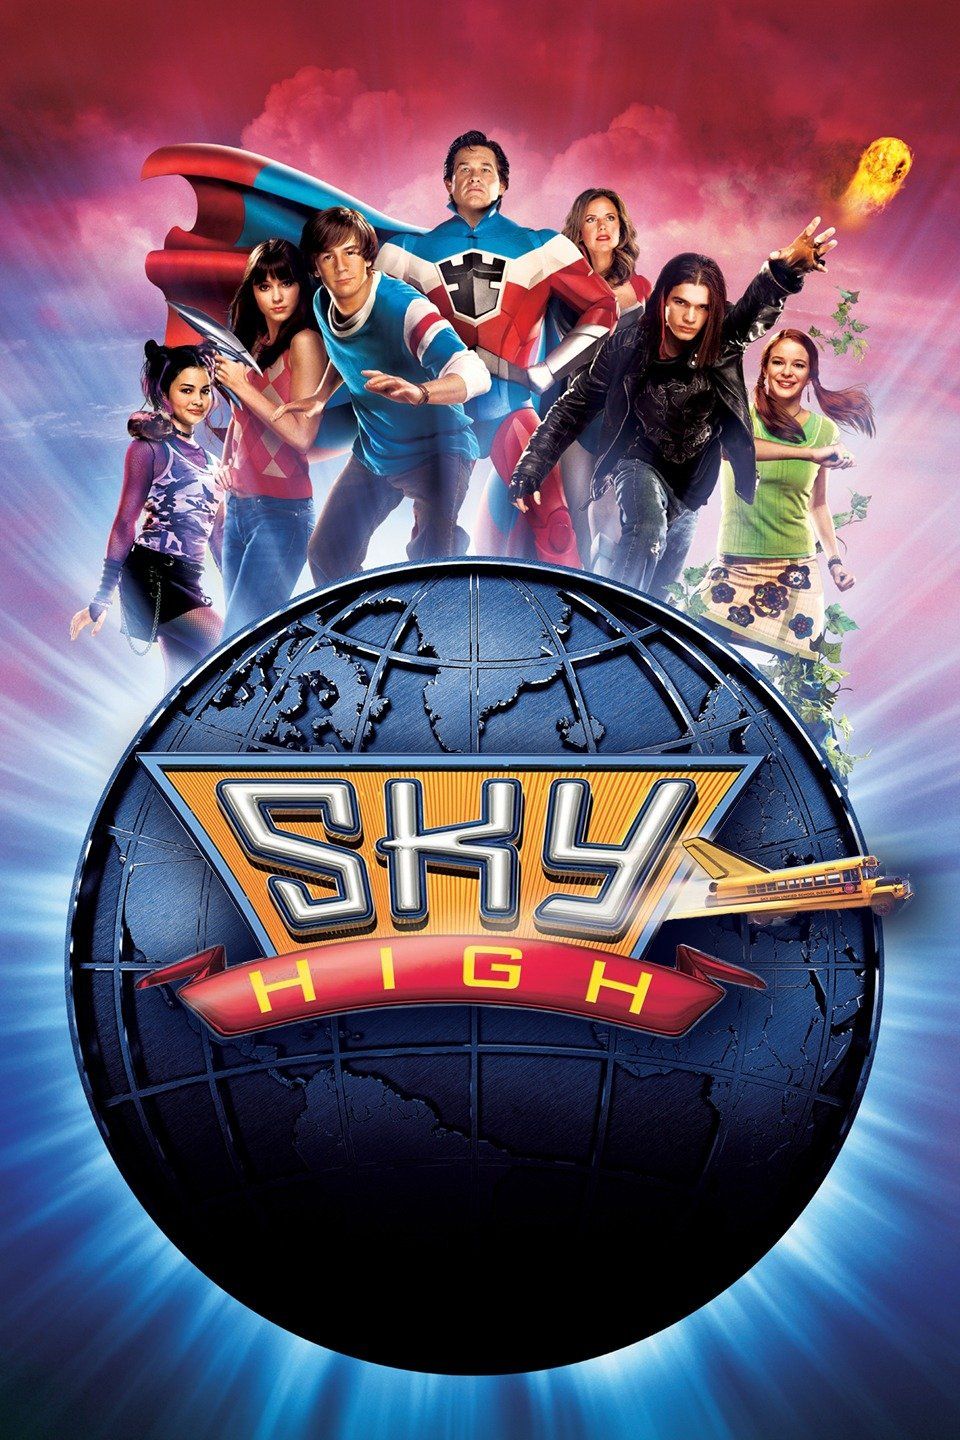 Watch Sky High (2005) Full Movie Online - Plex